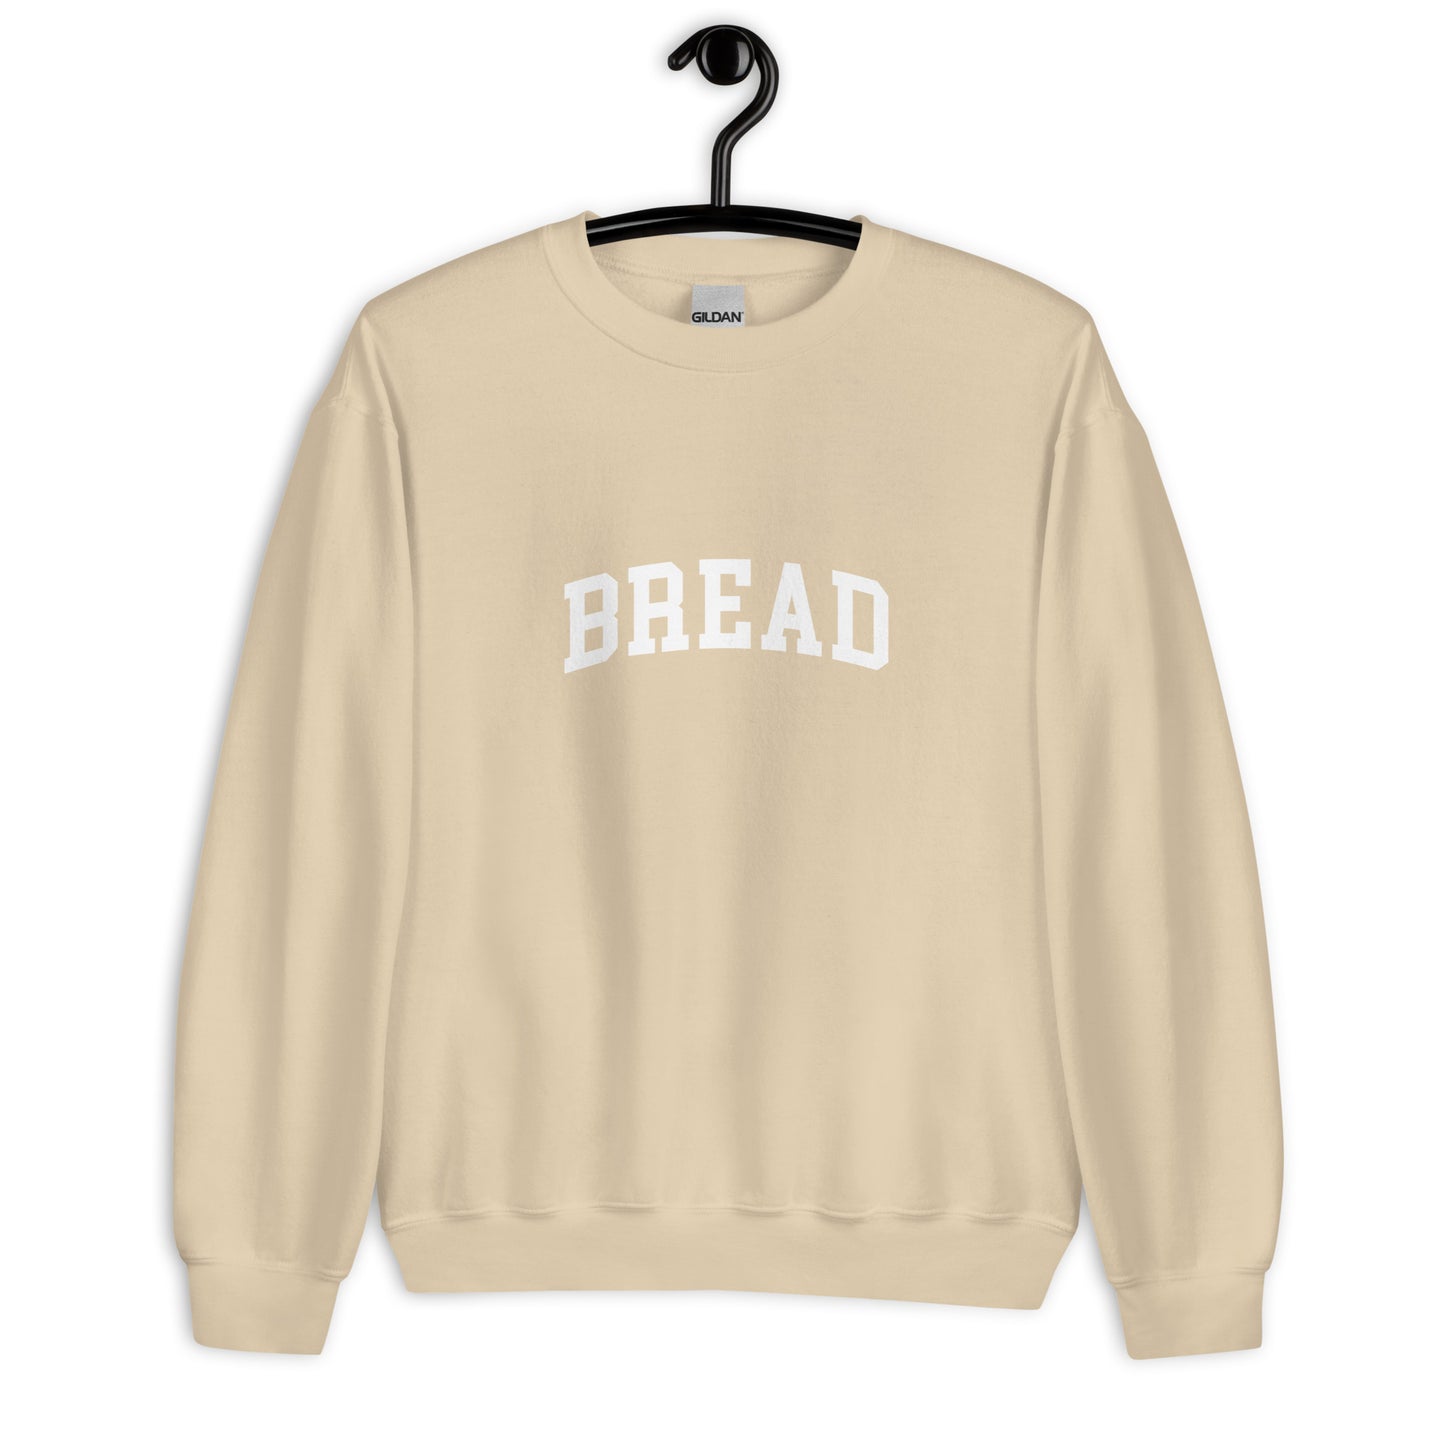 Bread Sweatshirt - Arched Font